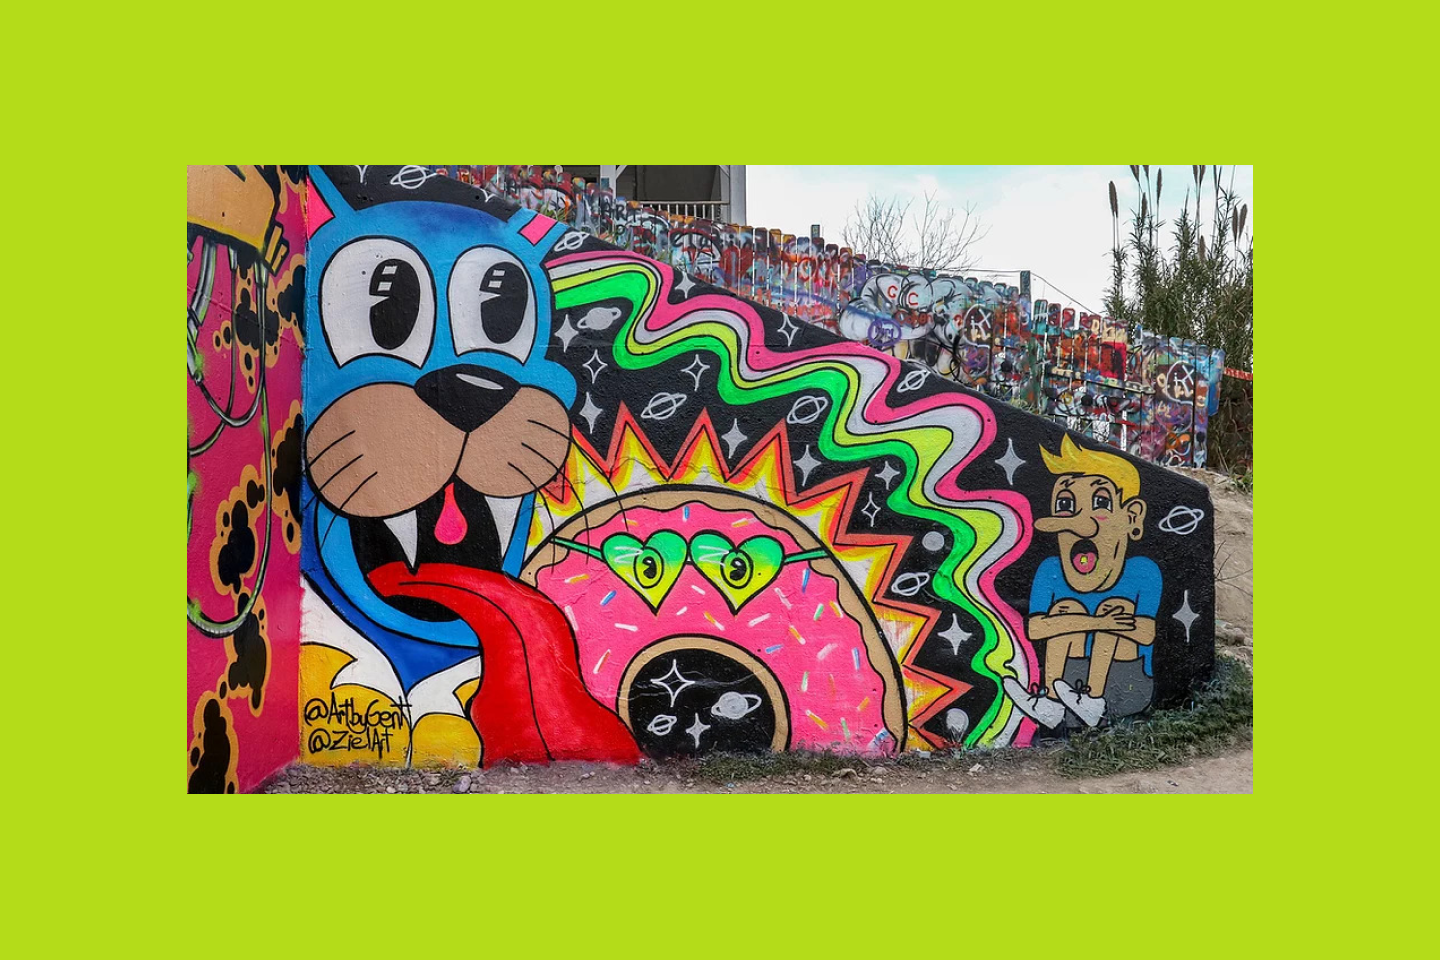 dinding seni grafiti dengan kucing neon, donat dan orang